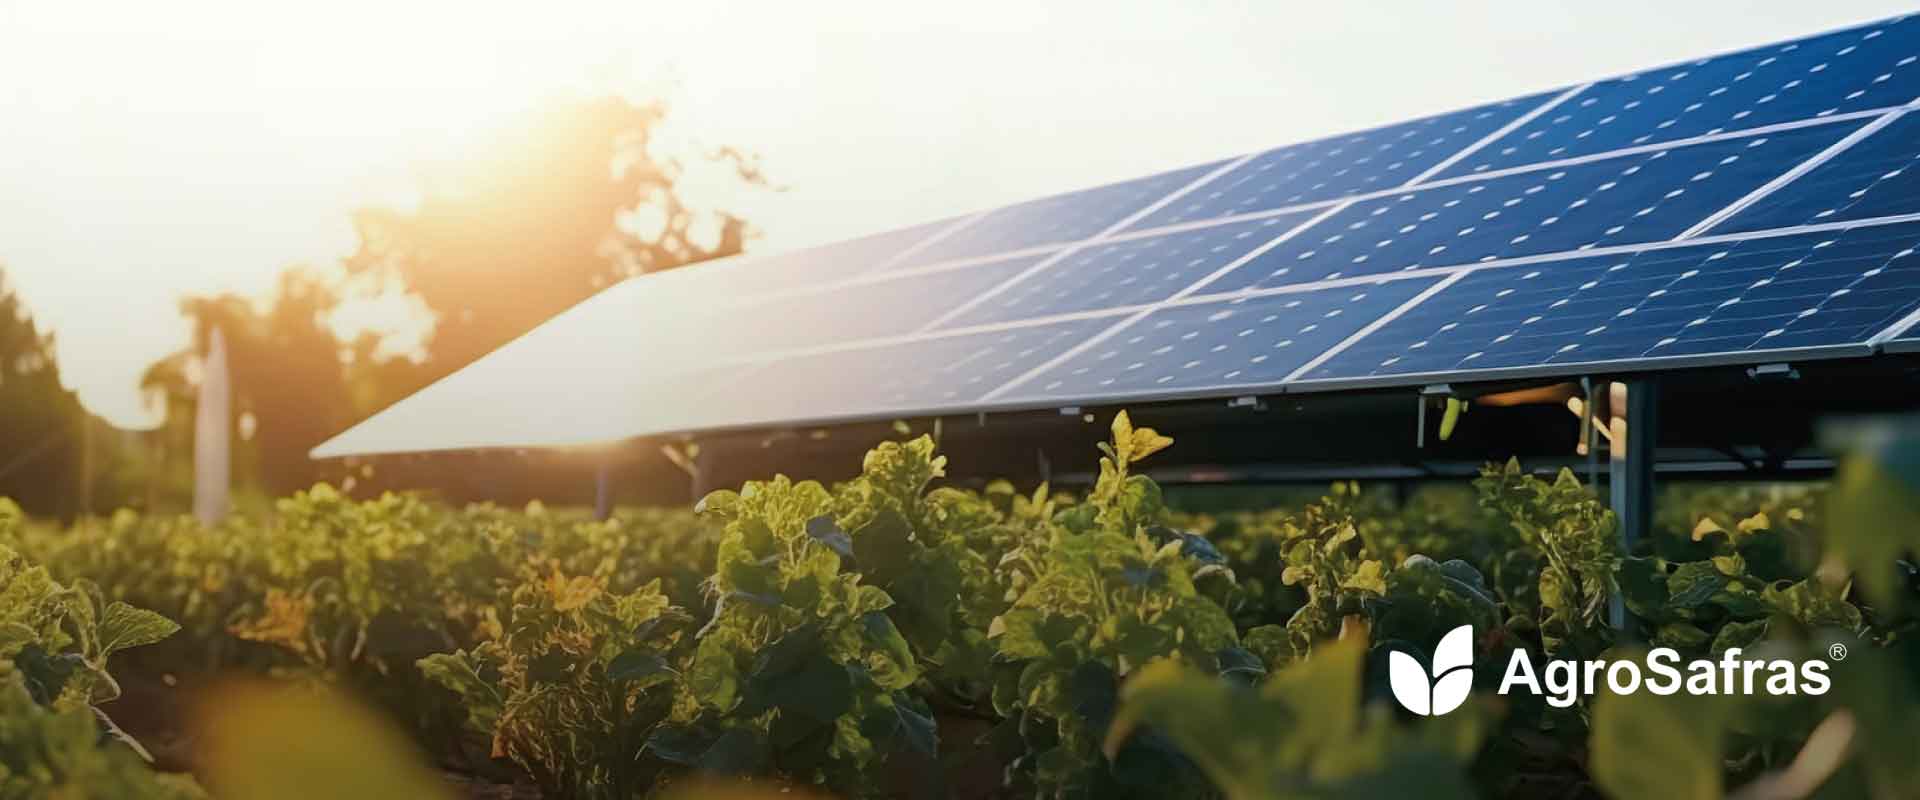 AgroSafras - Energia Solar